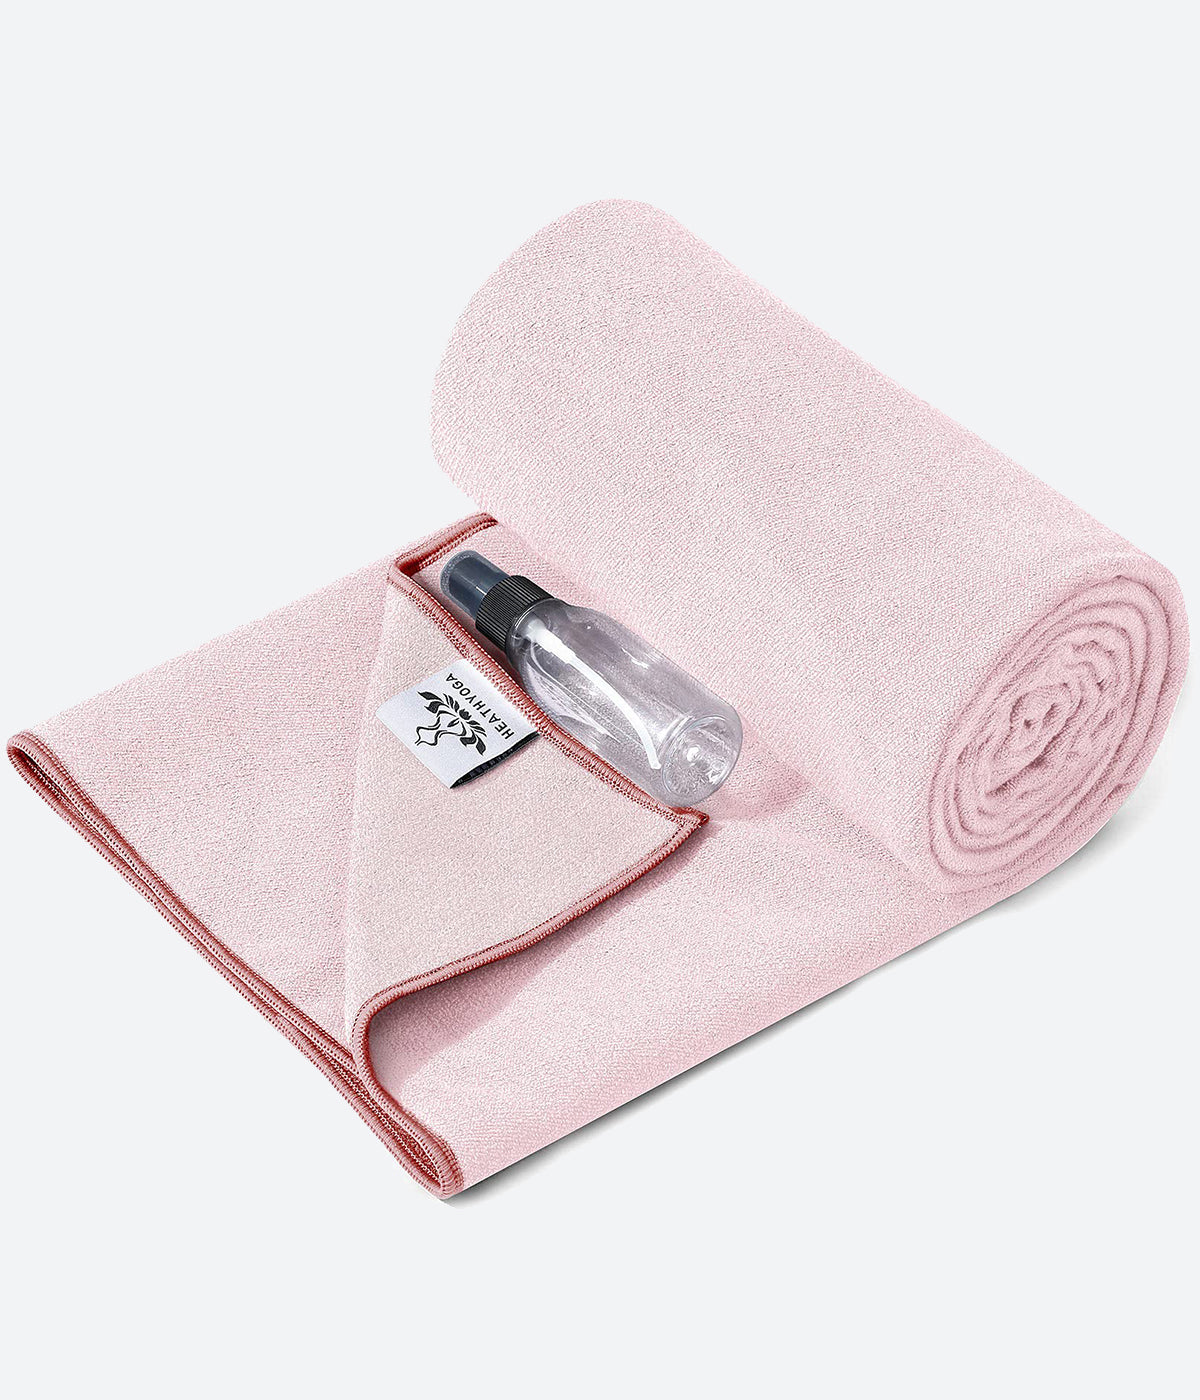  Heathyoga Hot Yoga Towel Non Slip, Microfiber Non Slip Yoga  Mat Towel, Exclusive Corner Pockets Design, Dual-Grip, Sweat Absorbent,  Perfect for Hot Yoga, Bikram, Pilates and Yoga Mats : Sports